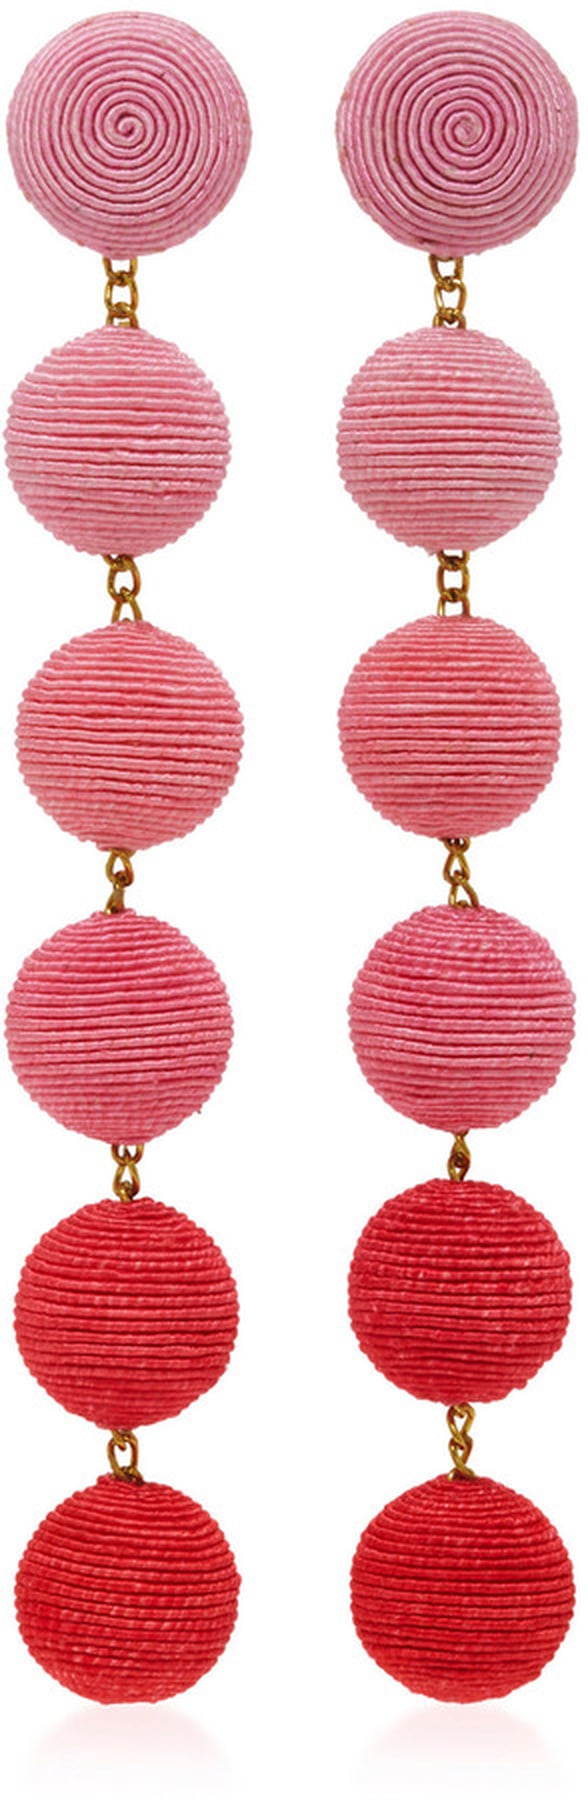 Millennial Pink Pom-Pom Earrings | POPSUGAR Fashion